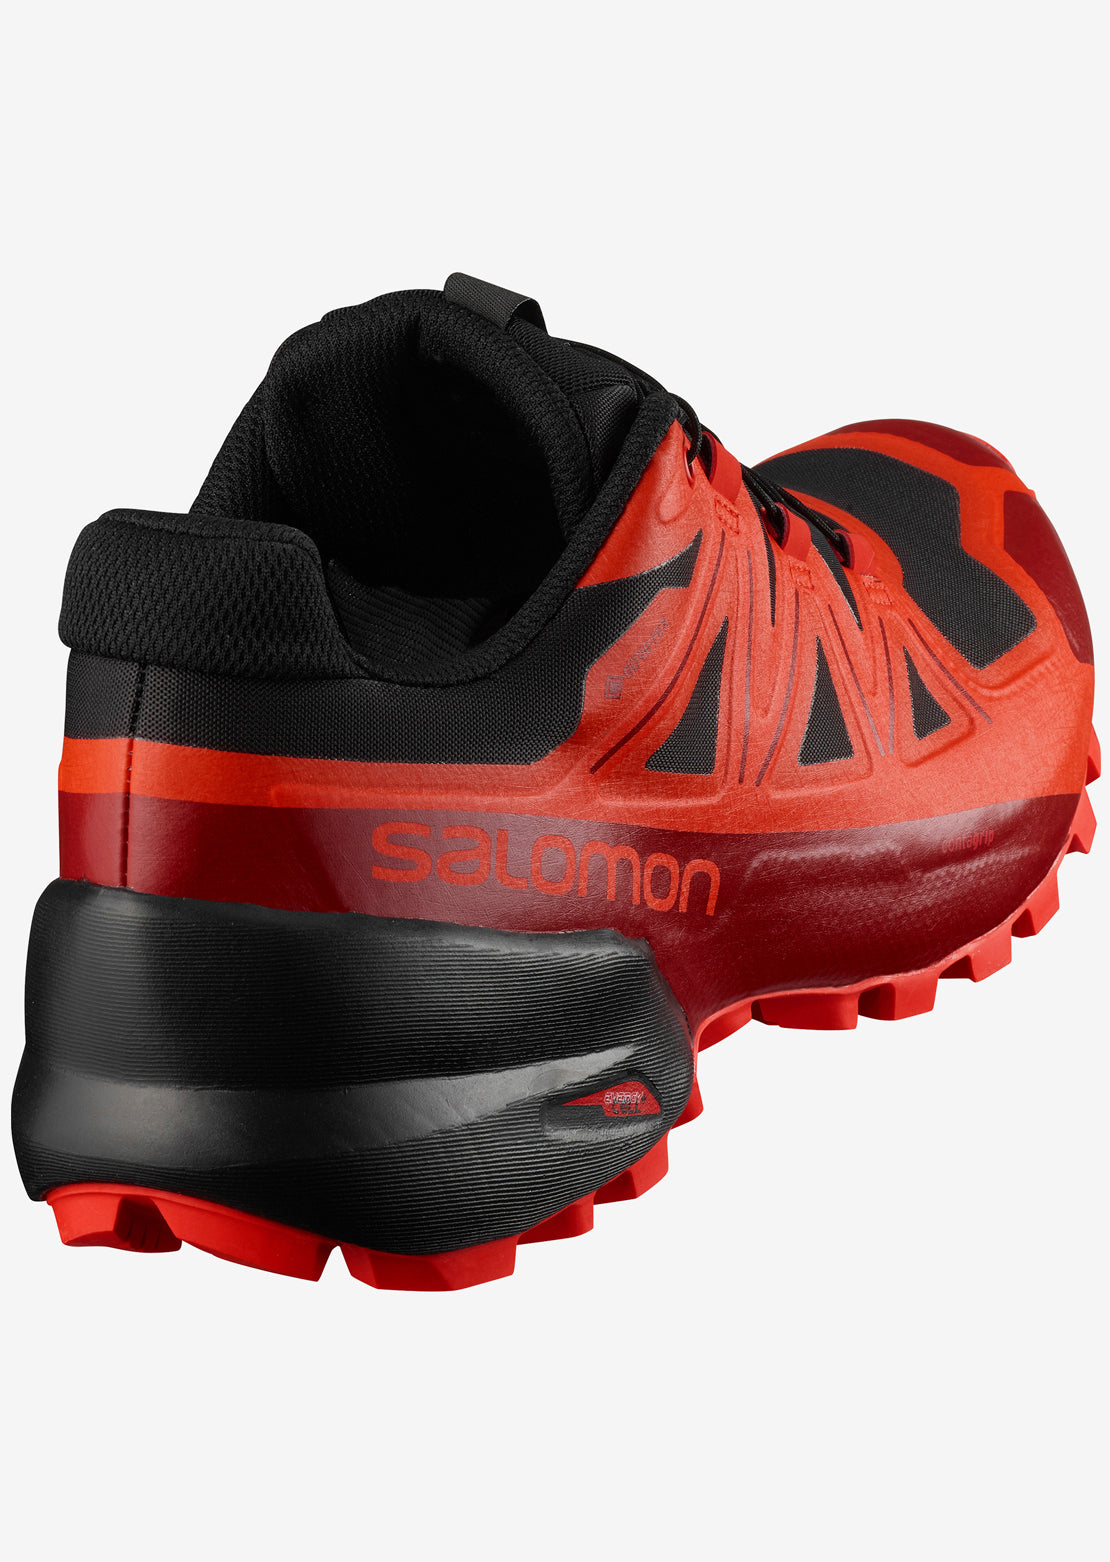 Salomon Unisex Spikecross 5 GORE-TEX Shoes Black/Racing Red/Red Dahlia